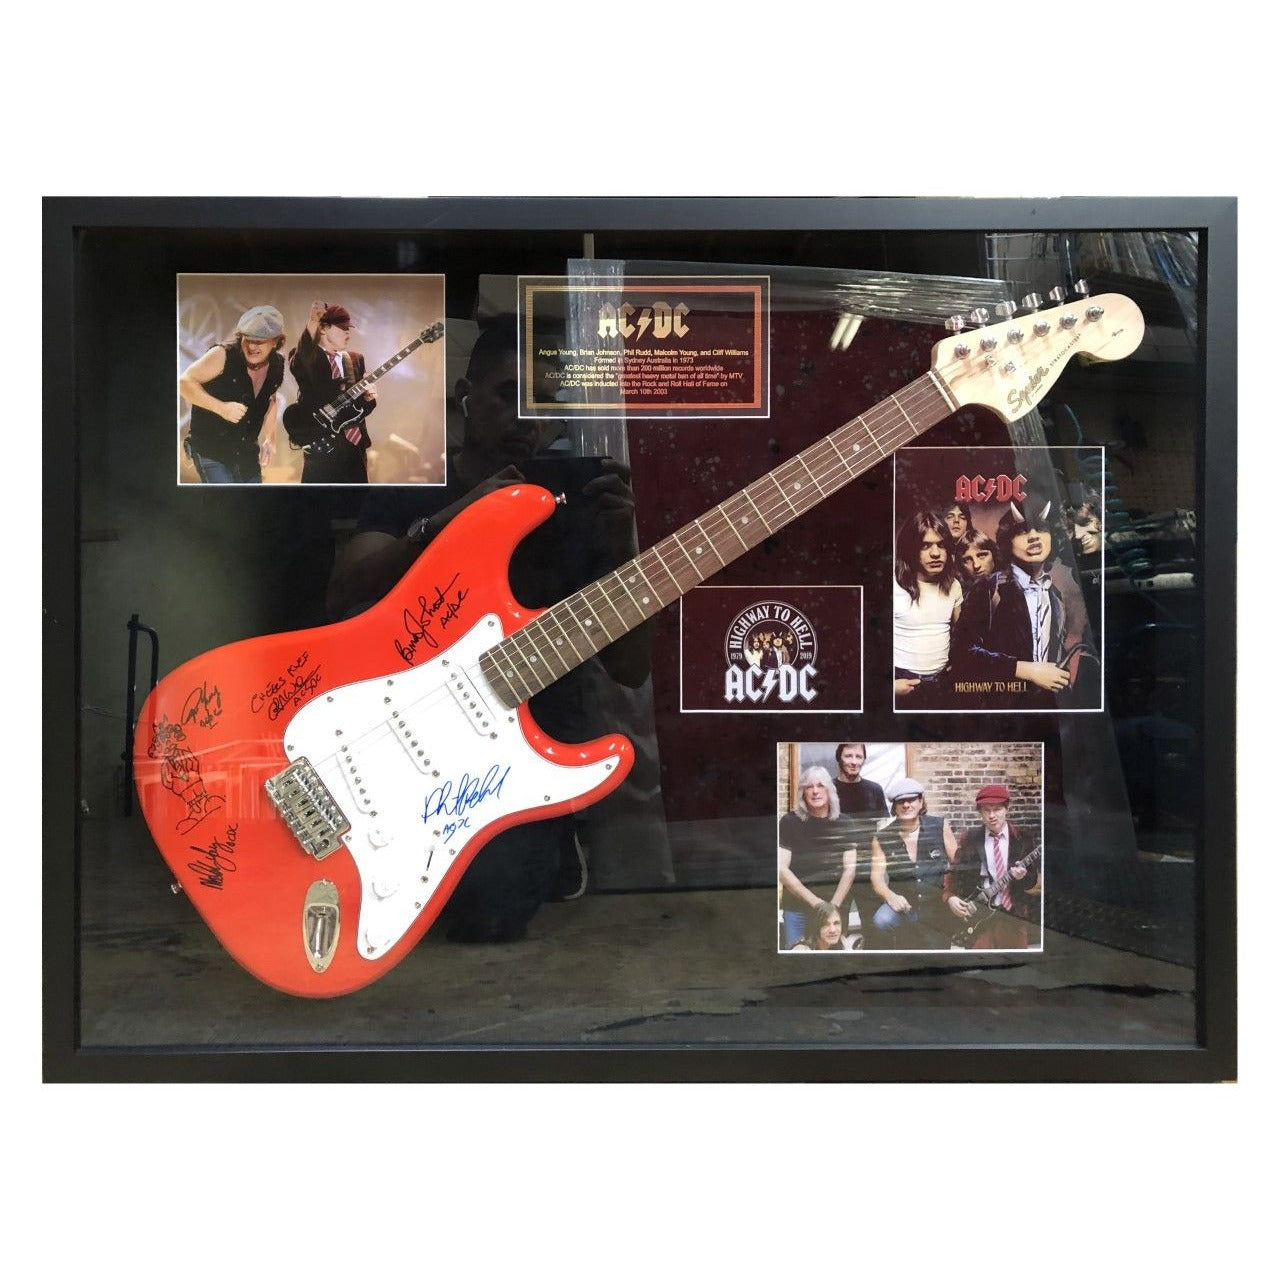 Van Halen Eddie Alex Sammy David Lee Stratocaster Huntington electric guitar signed with proof